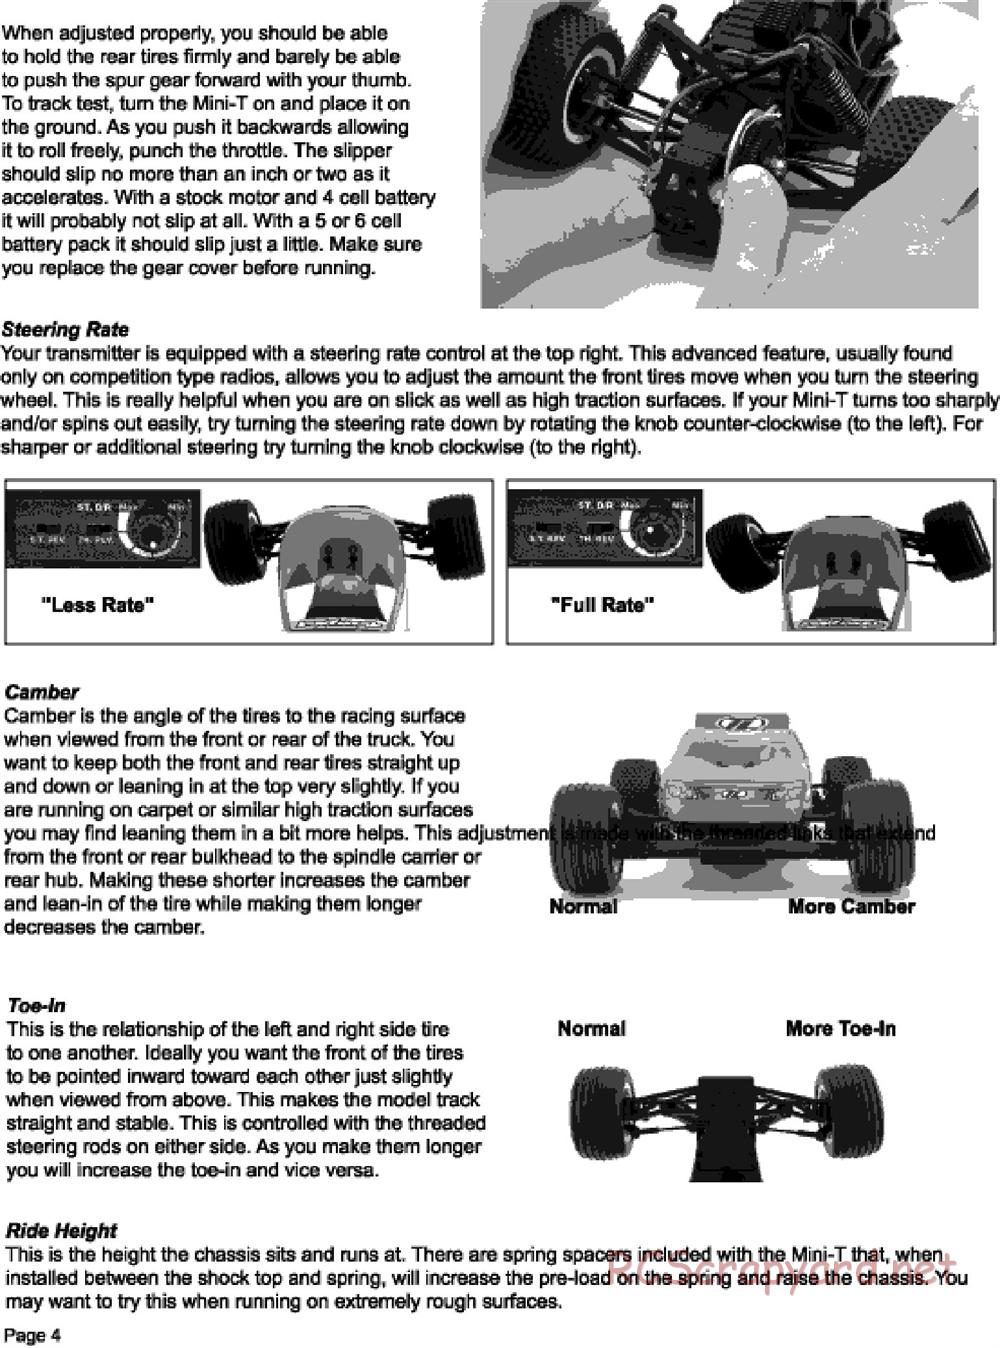 Team Losi - Mini-T - Manual - Page 4